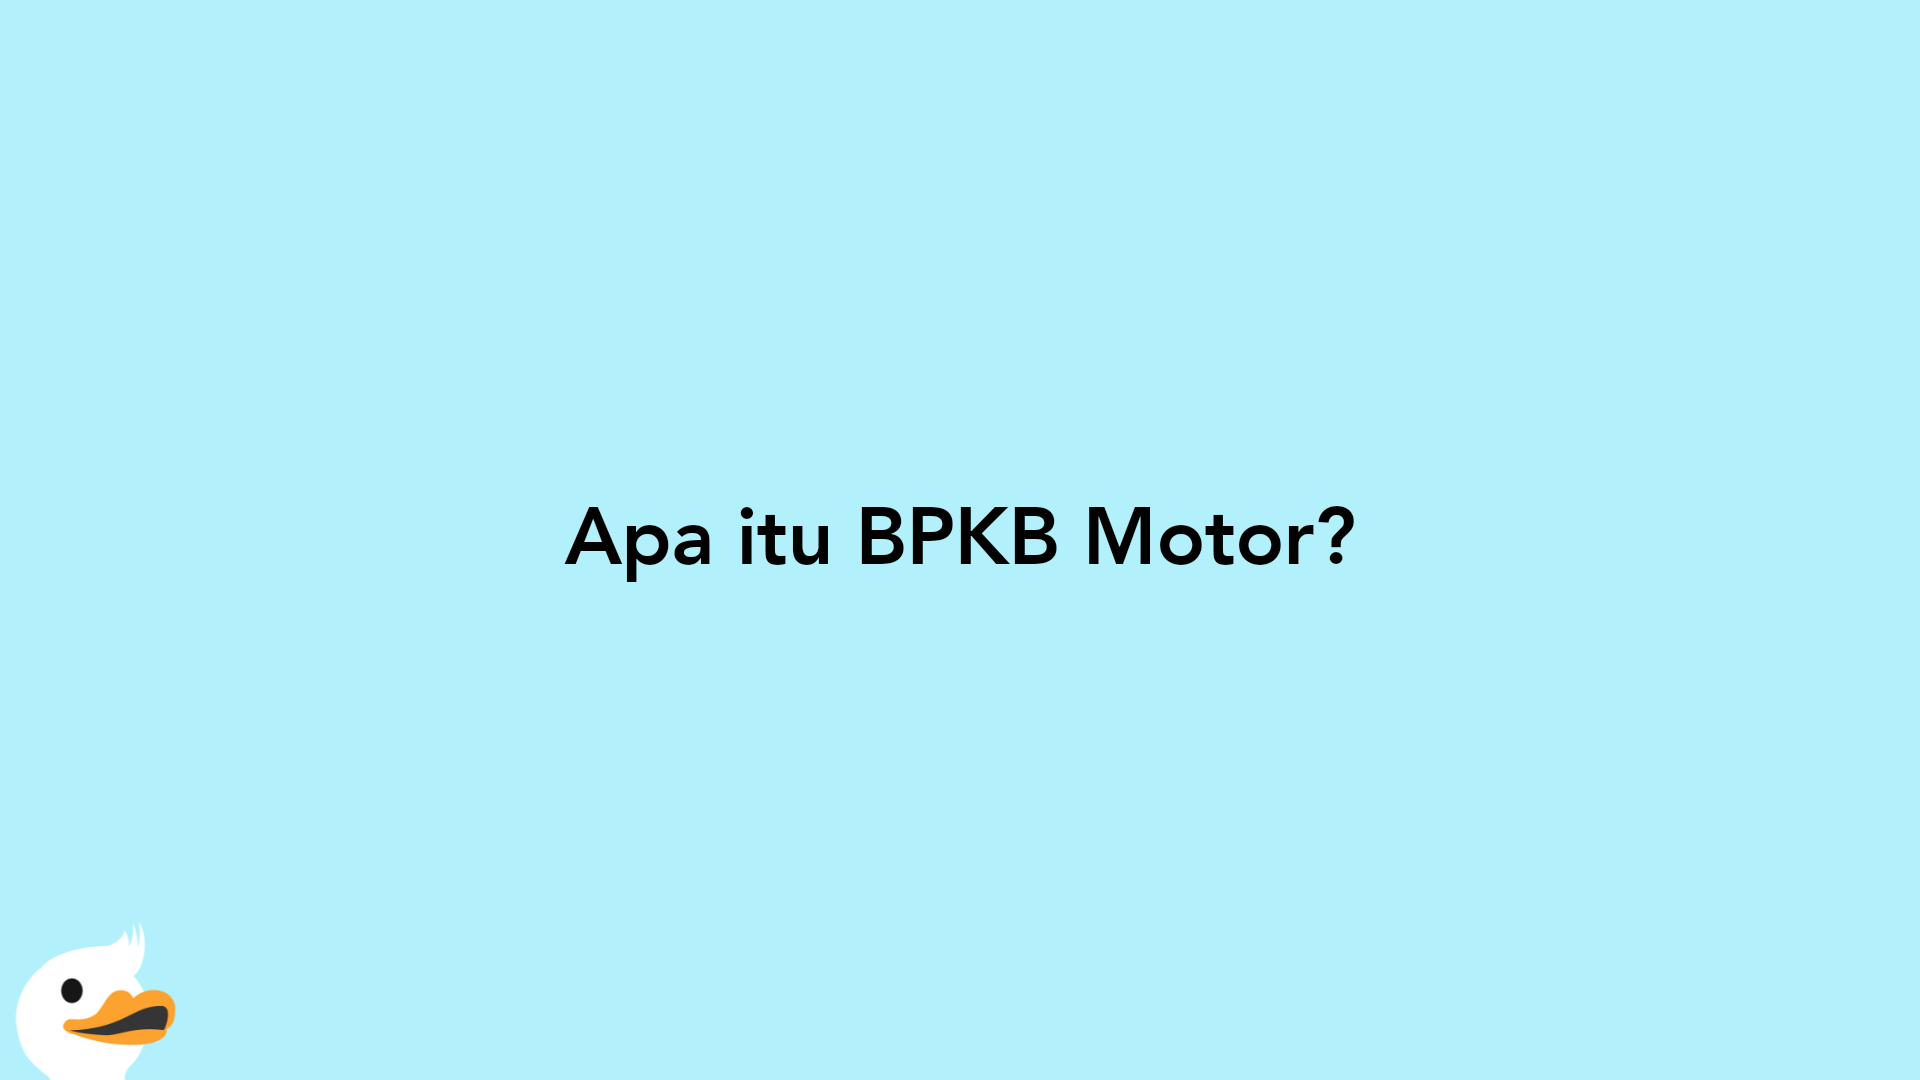 Apa itu BPKB Motor?